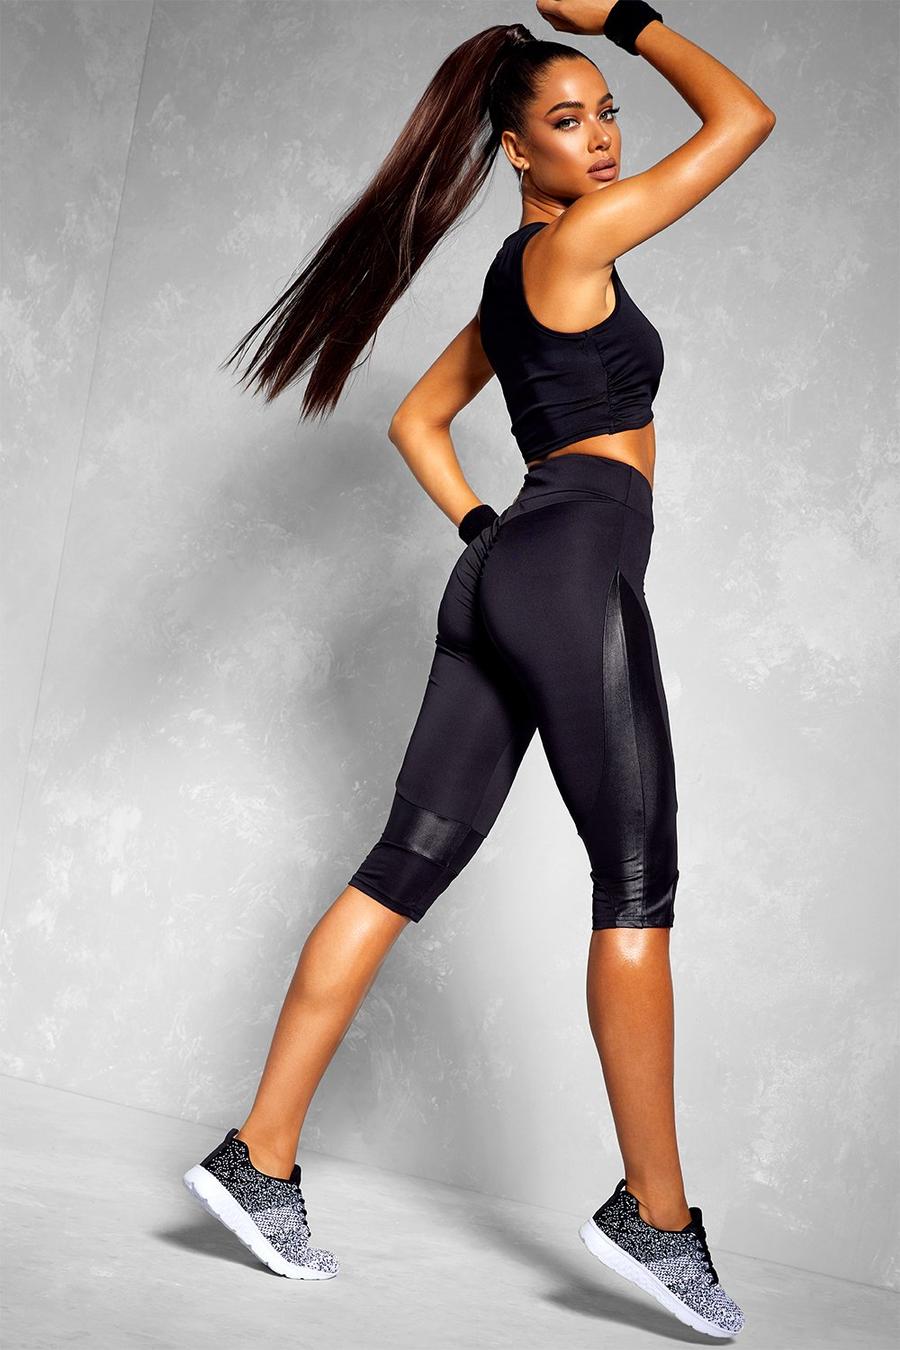 https://media.boohoo.com/i/boohoo/fzz74691_black_xl/female-black-fit-booty-boost-wet-look-panel-gym-capri-leggings/?w=900&qlt=default&fmt.jp2.qlt=70&fmt=auto&sm=fit